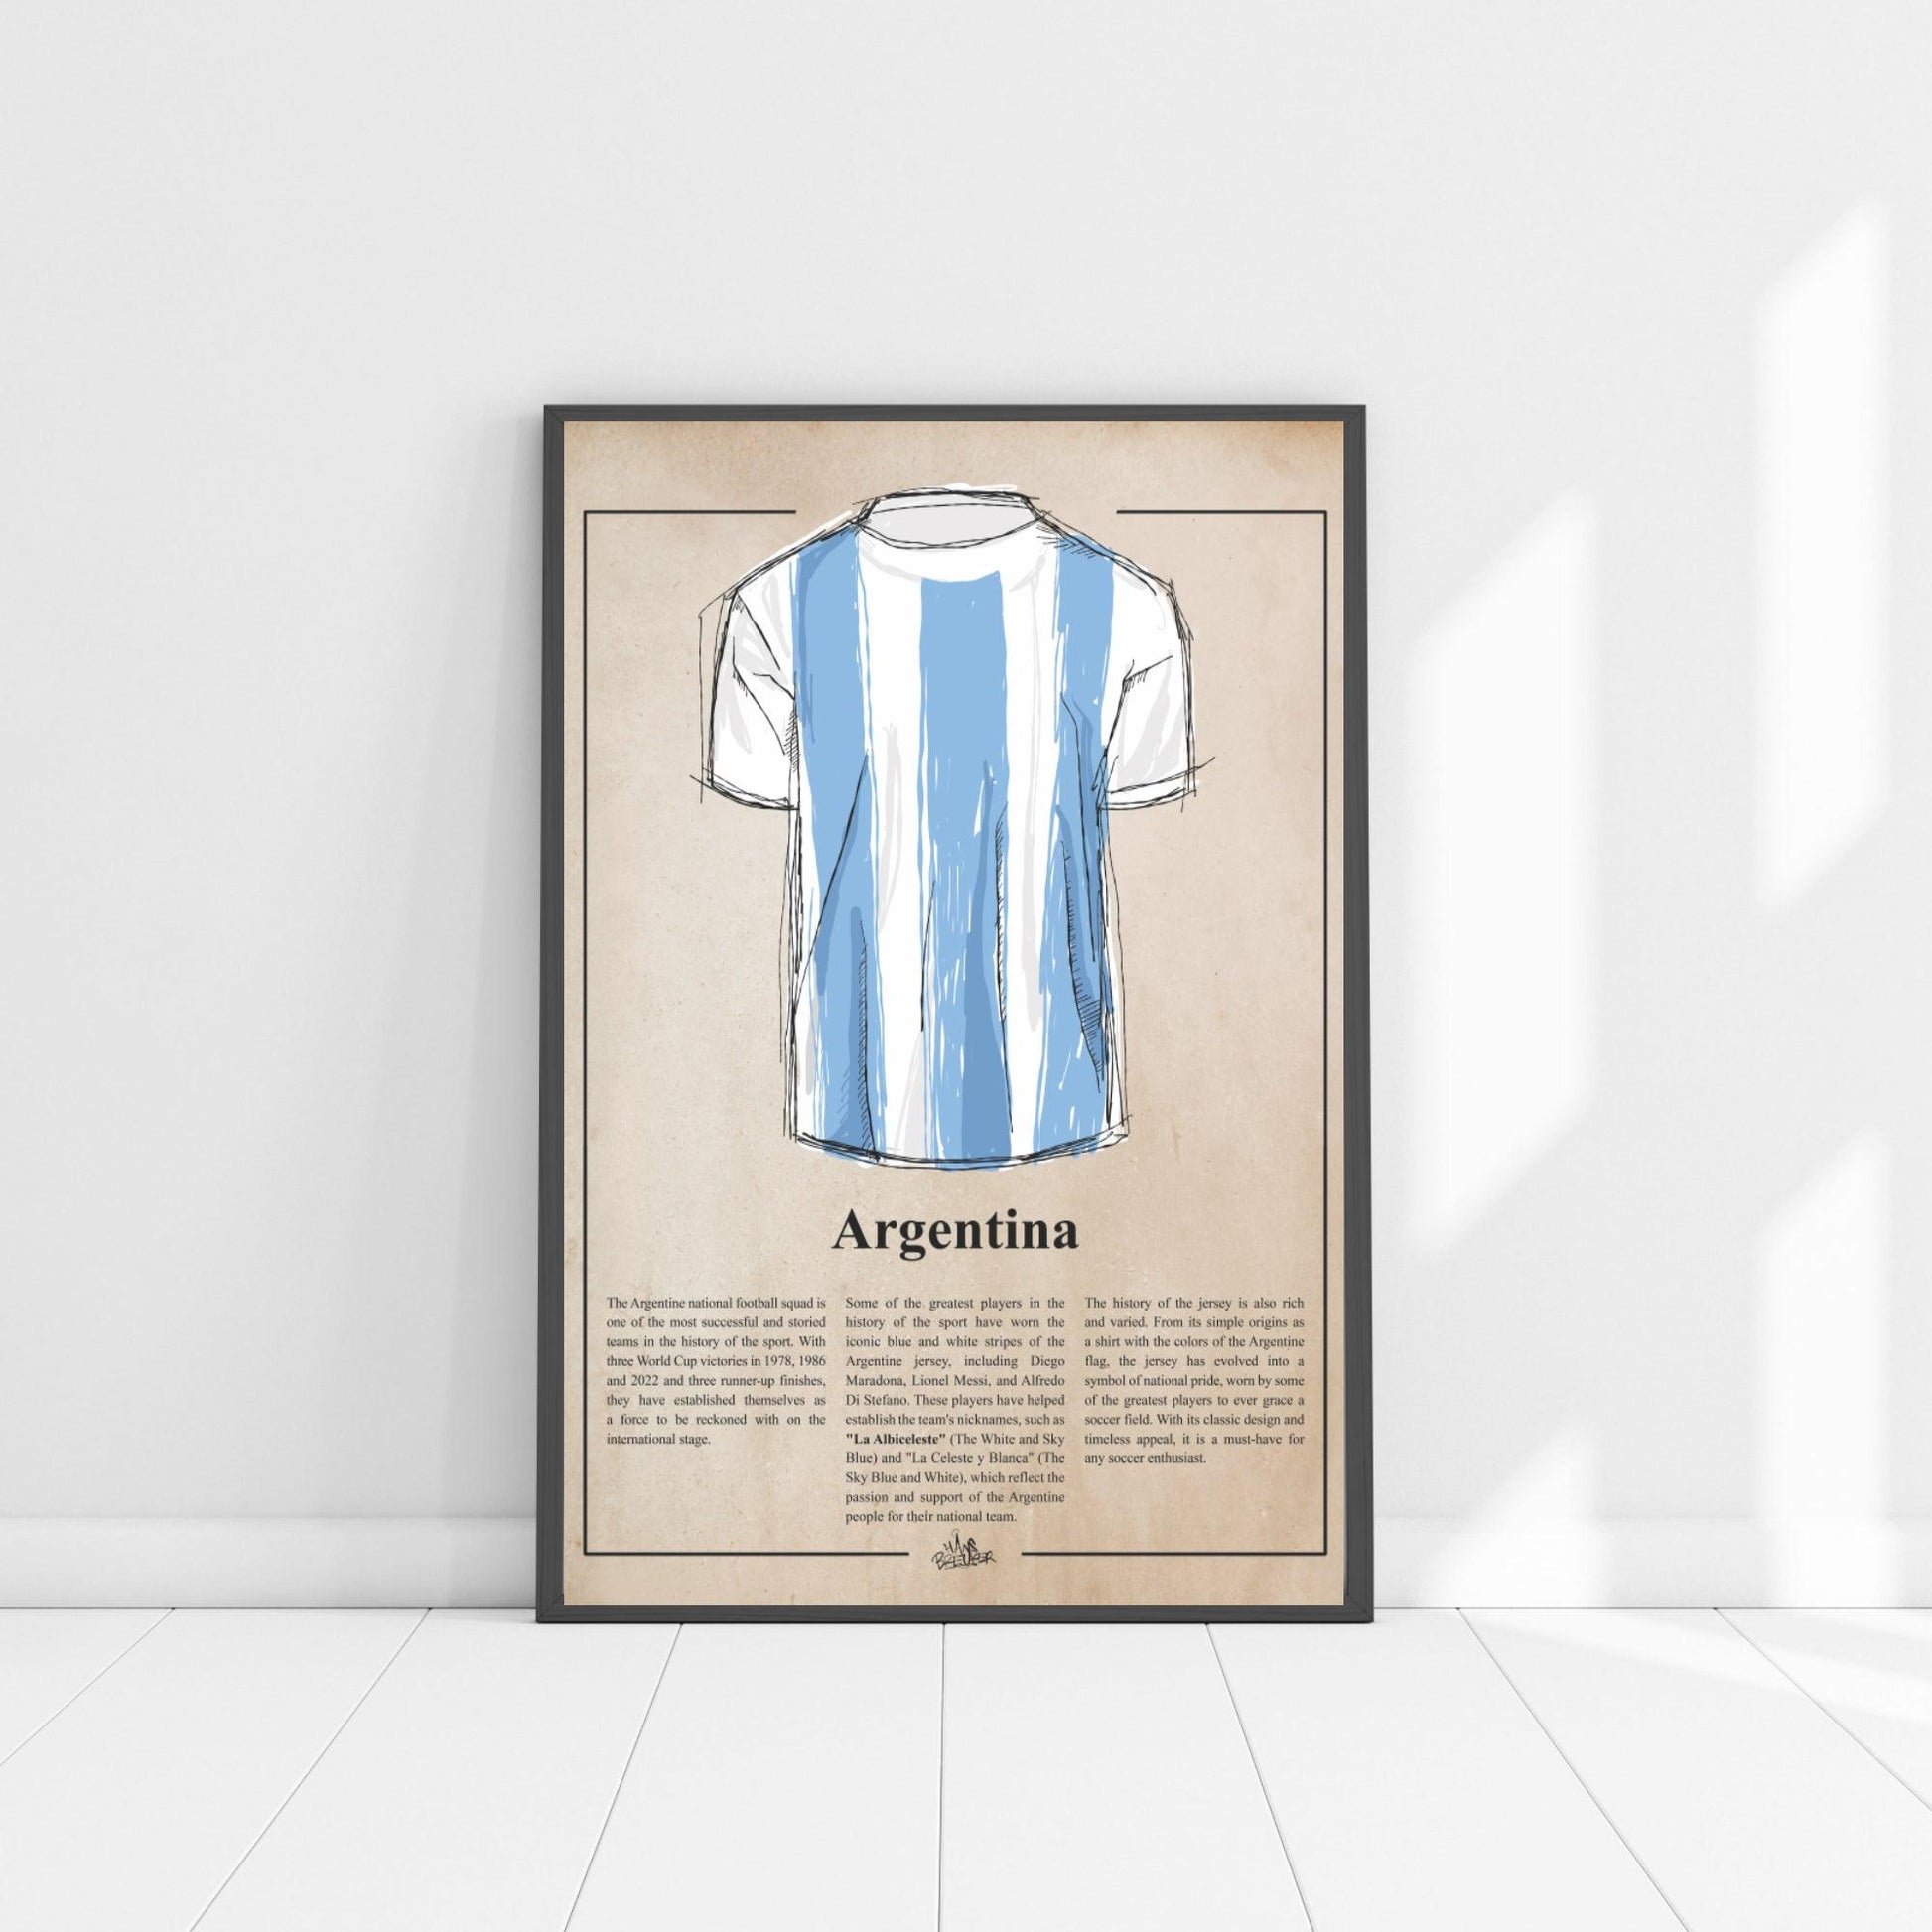 Argentinian soccer jersey - Hans Breuker